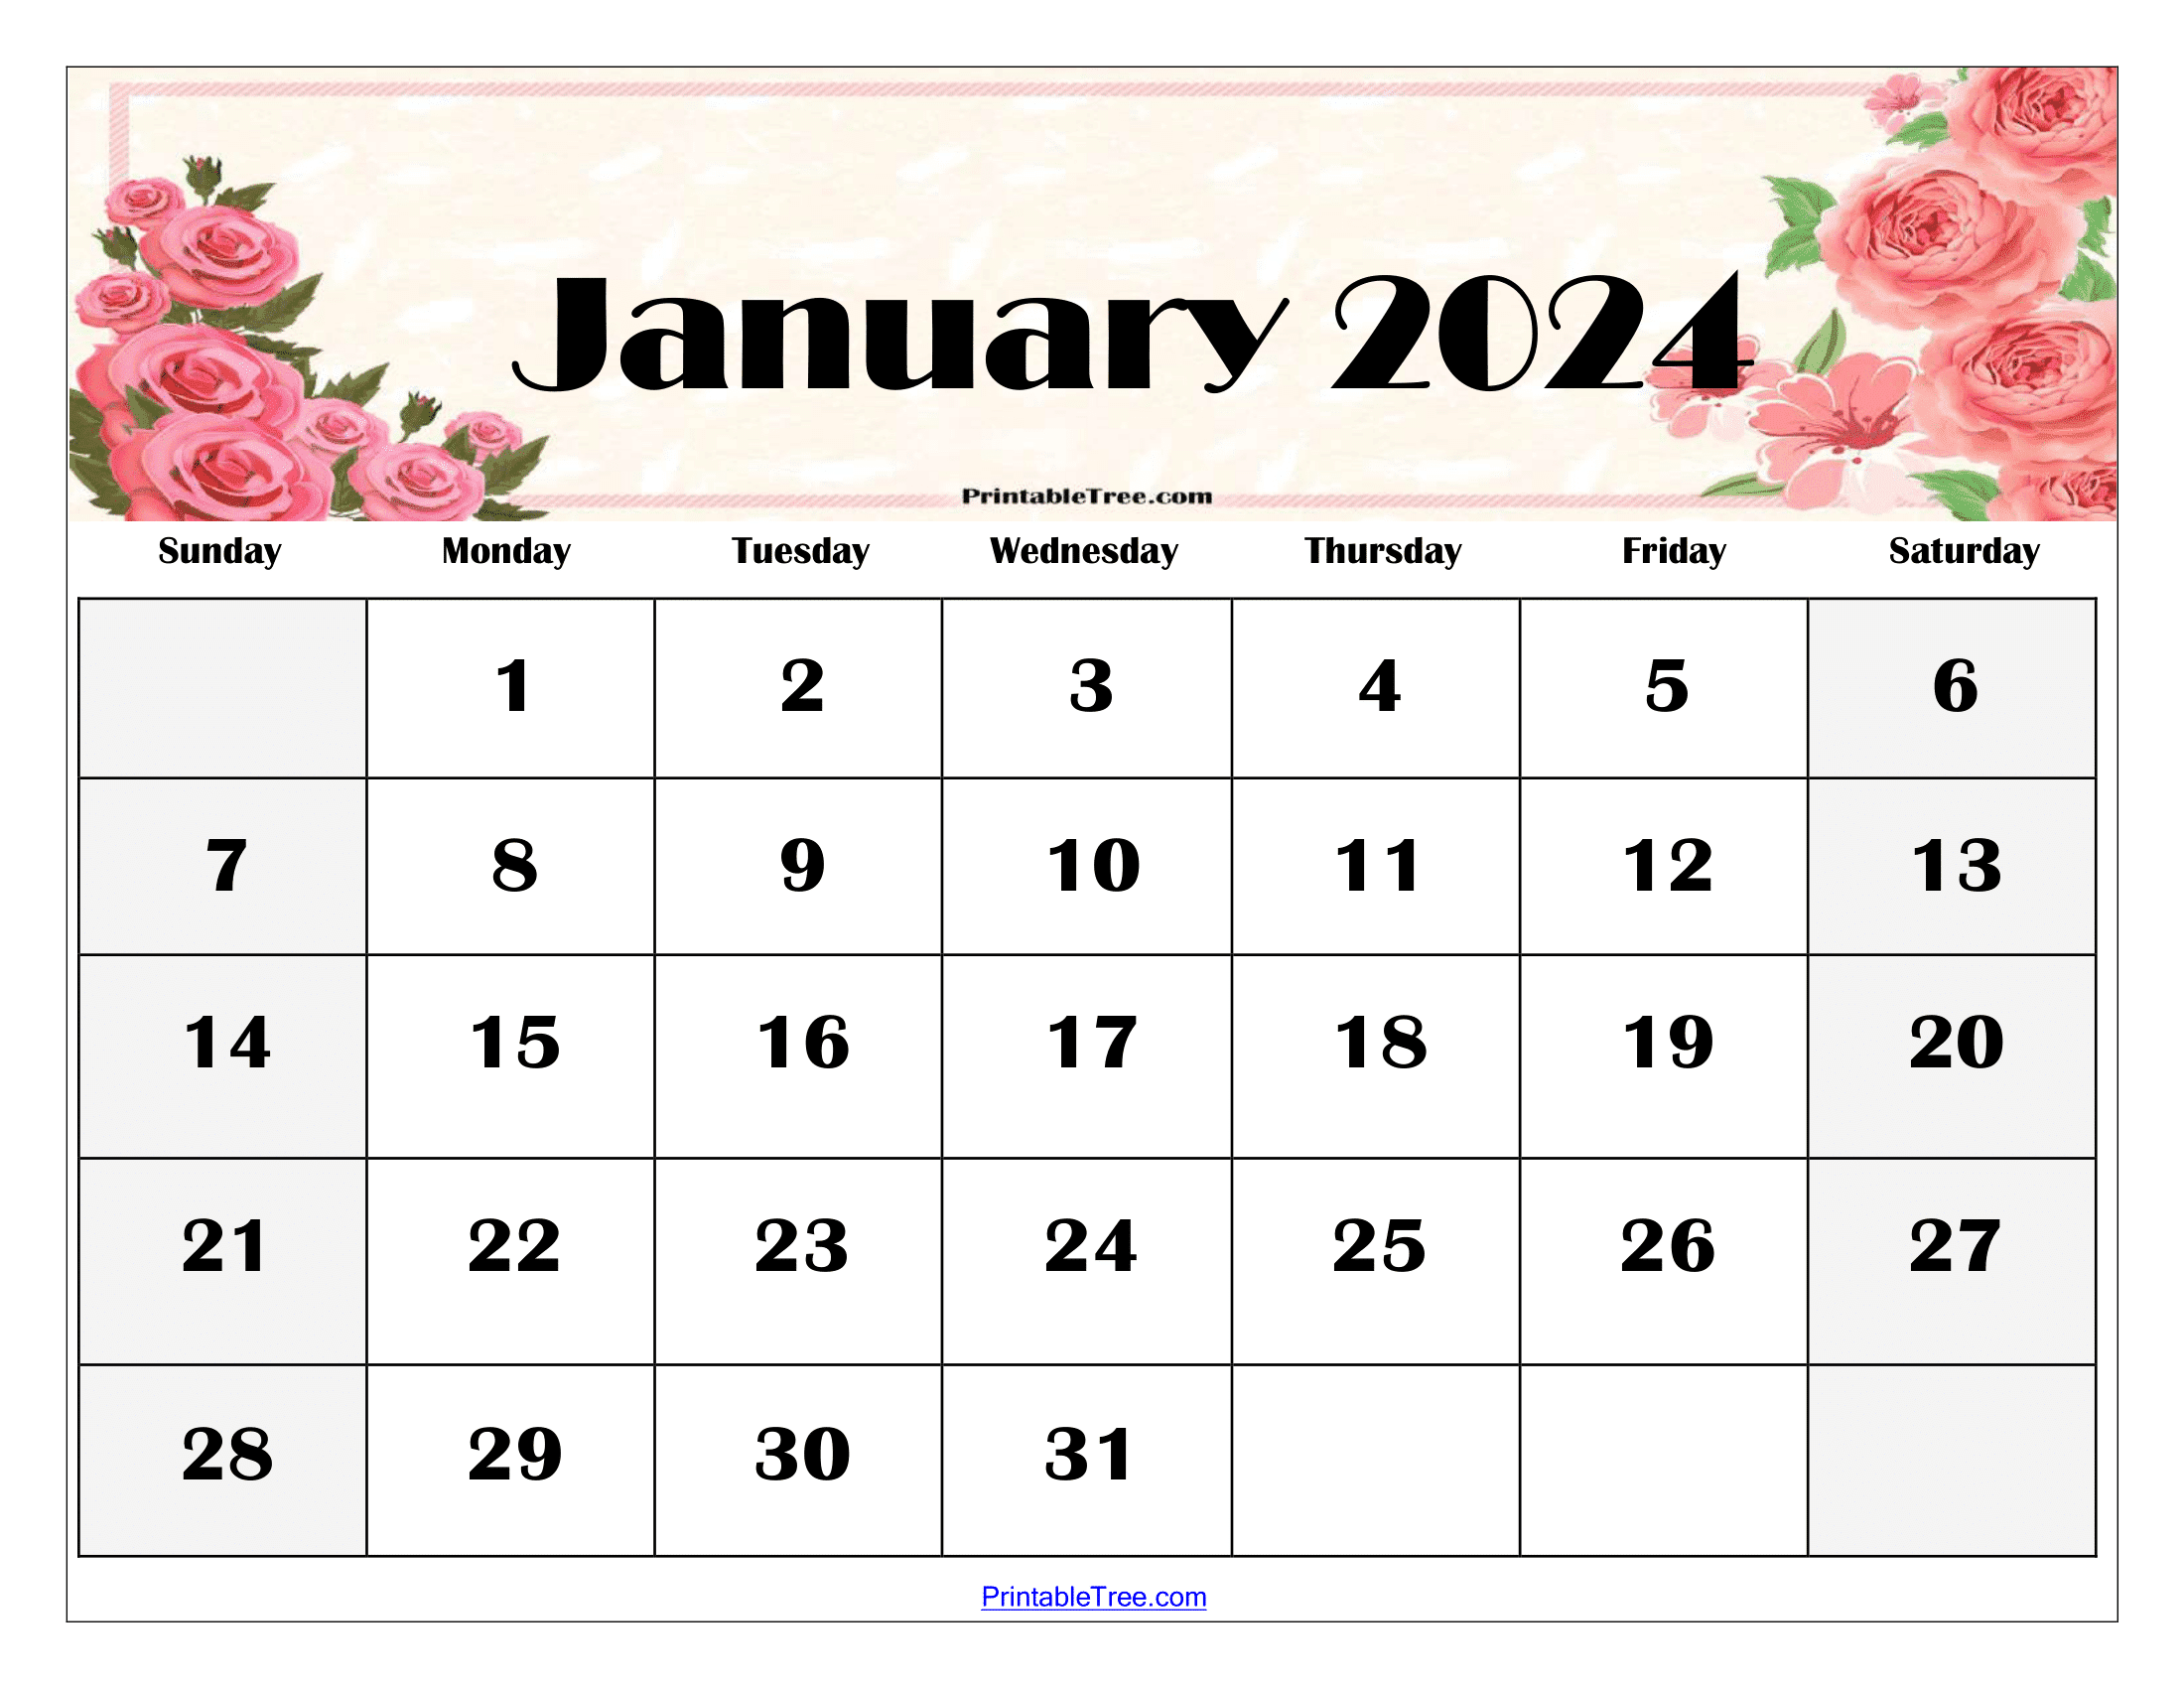 January 2024 Calendar Printable PDF Template With Holidays - Free Printable A4 Calendar January 2024